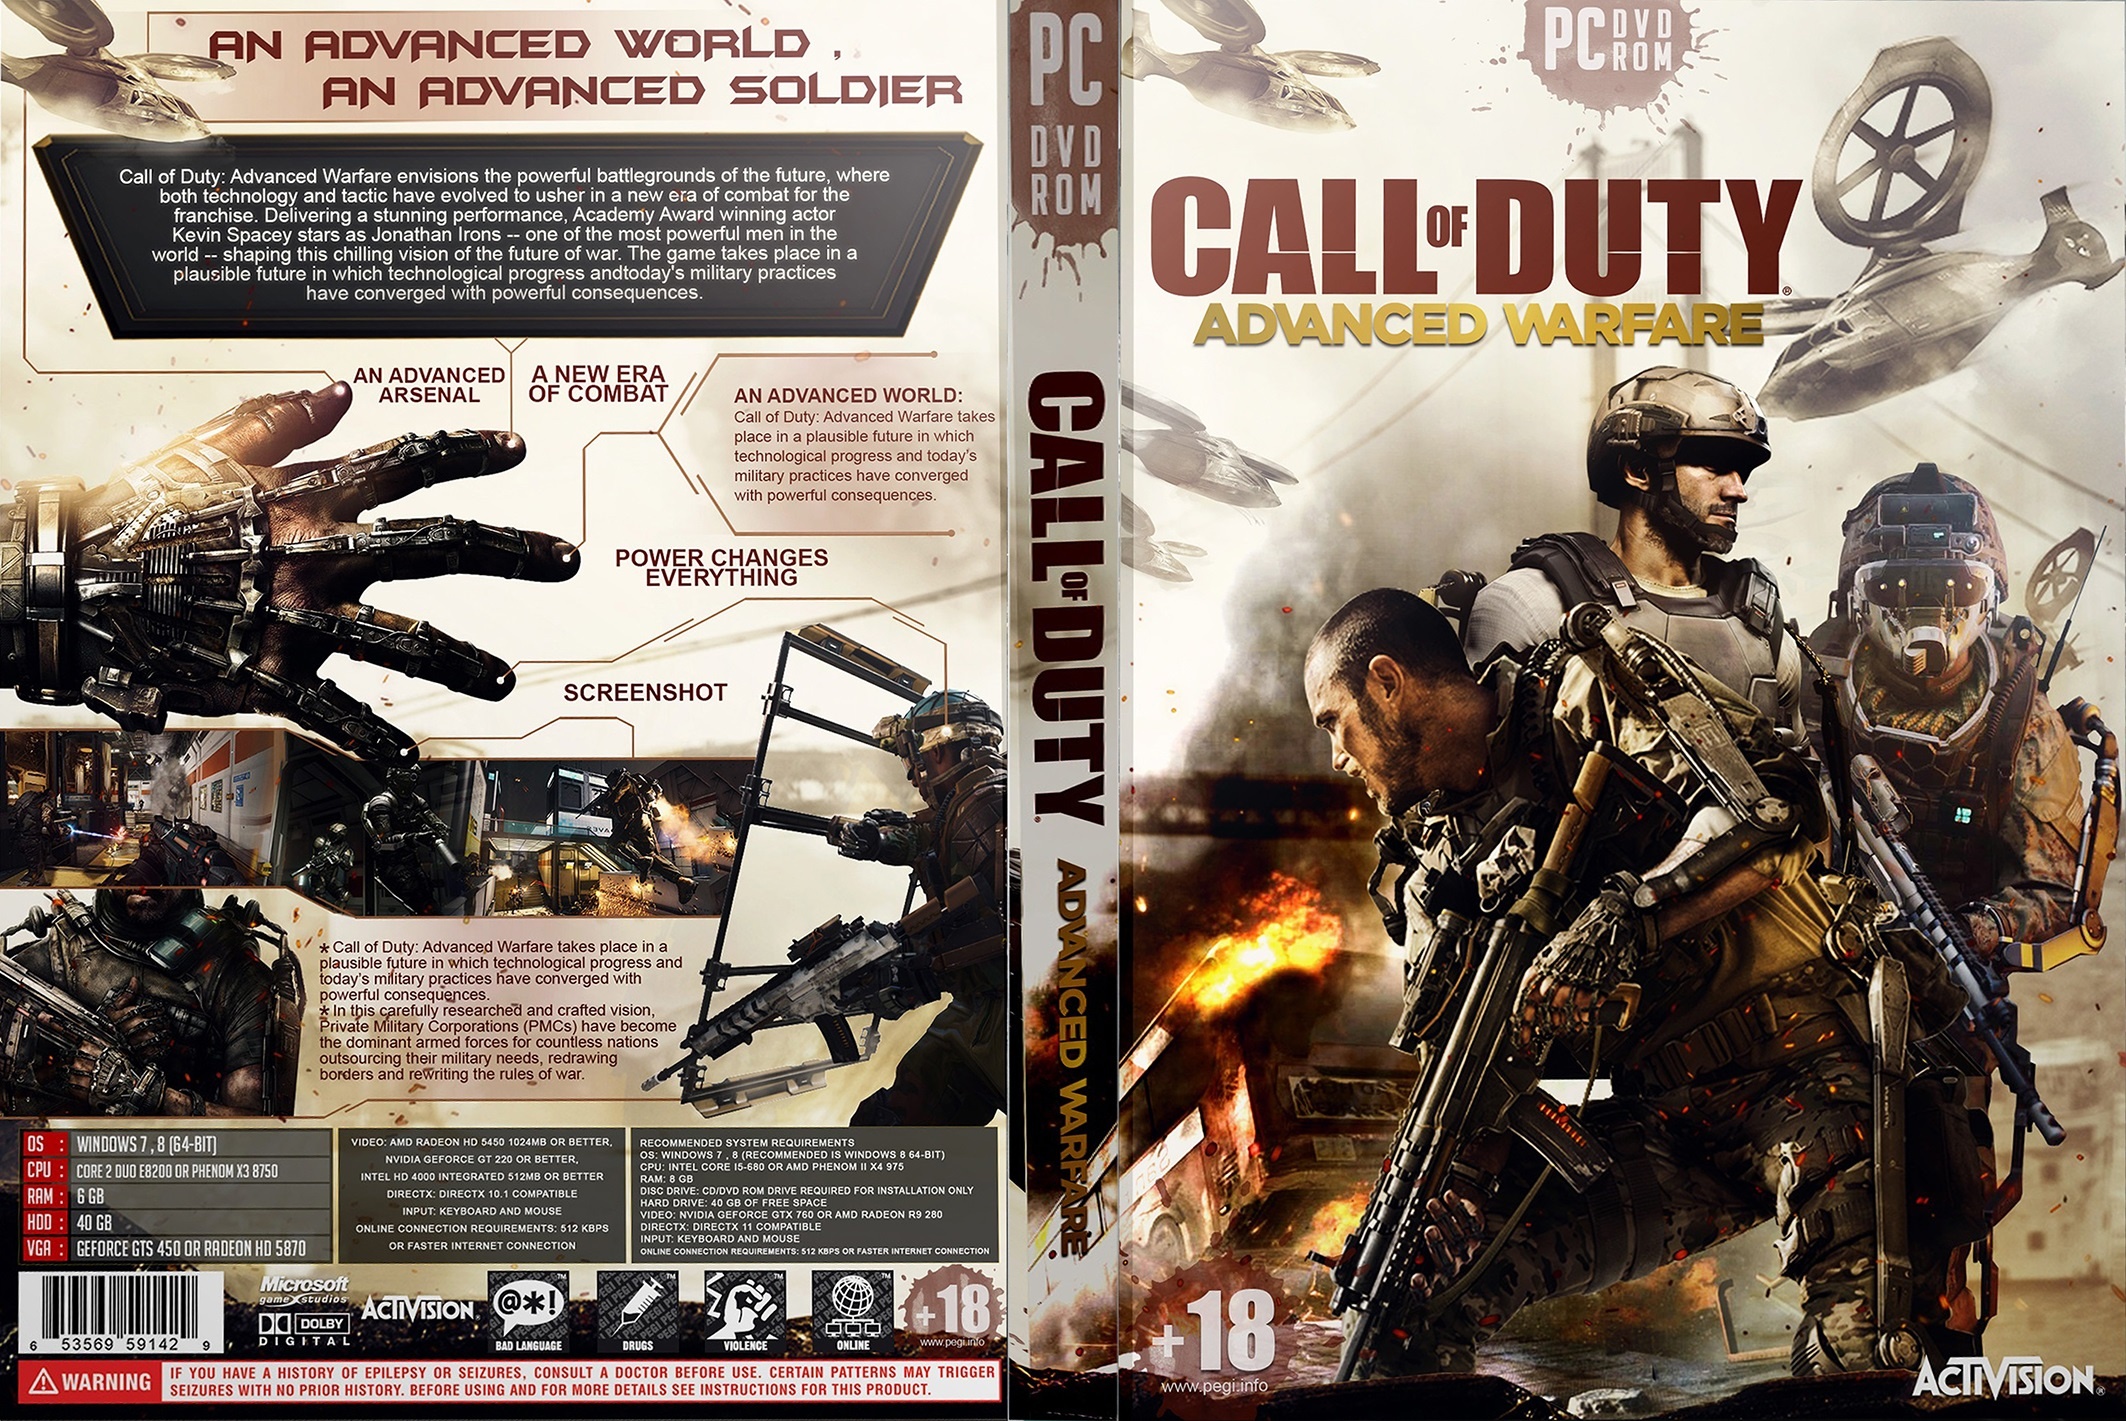 Диск игры call of duty. Диск антология Call of Duty. Call of Duty Advanced Warfare диск PC. Call of Duty Advanced Warfare PC DVD. Call of Duty Advanced Warfare диск.